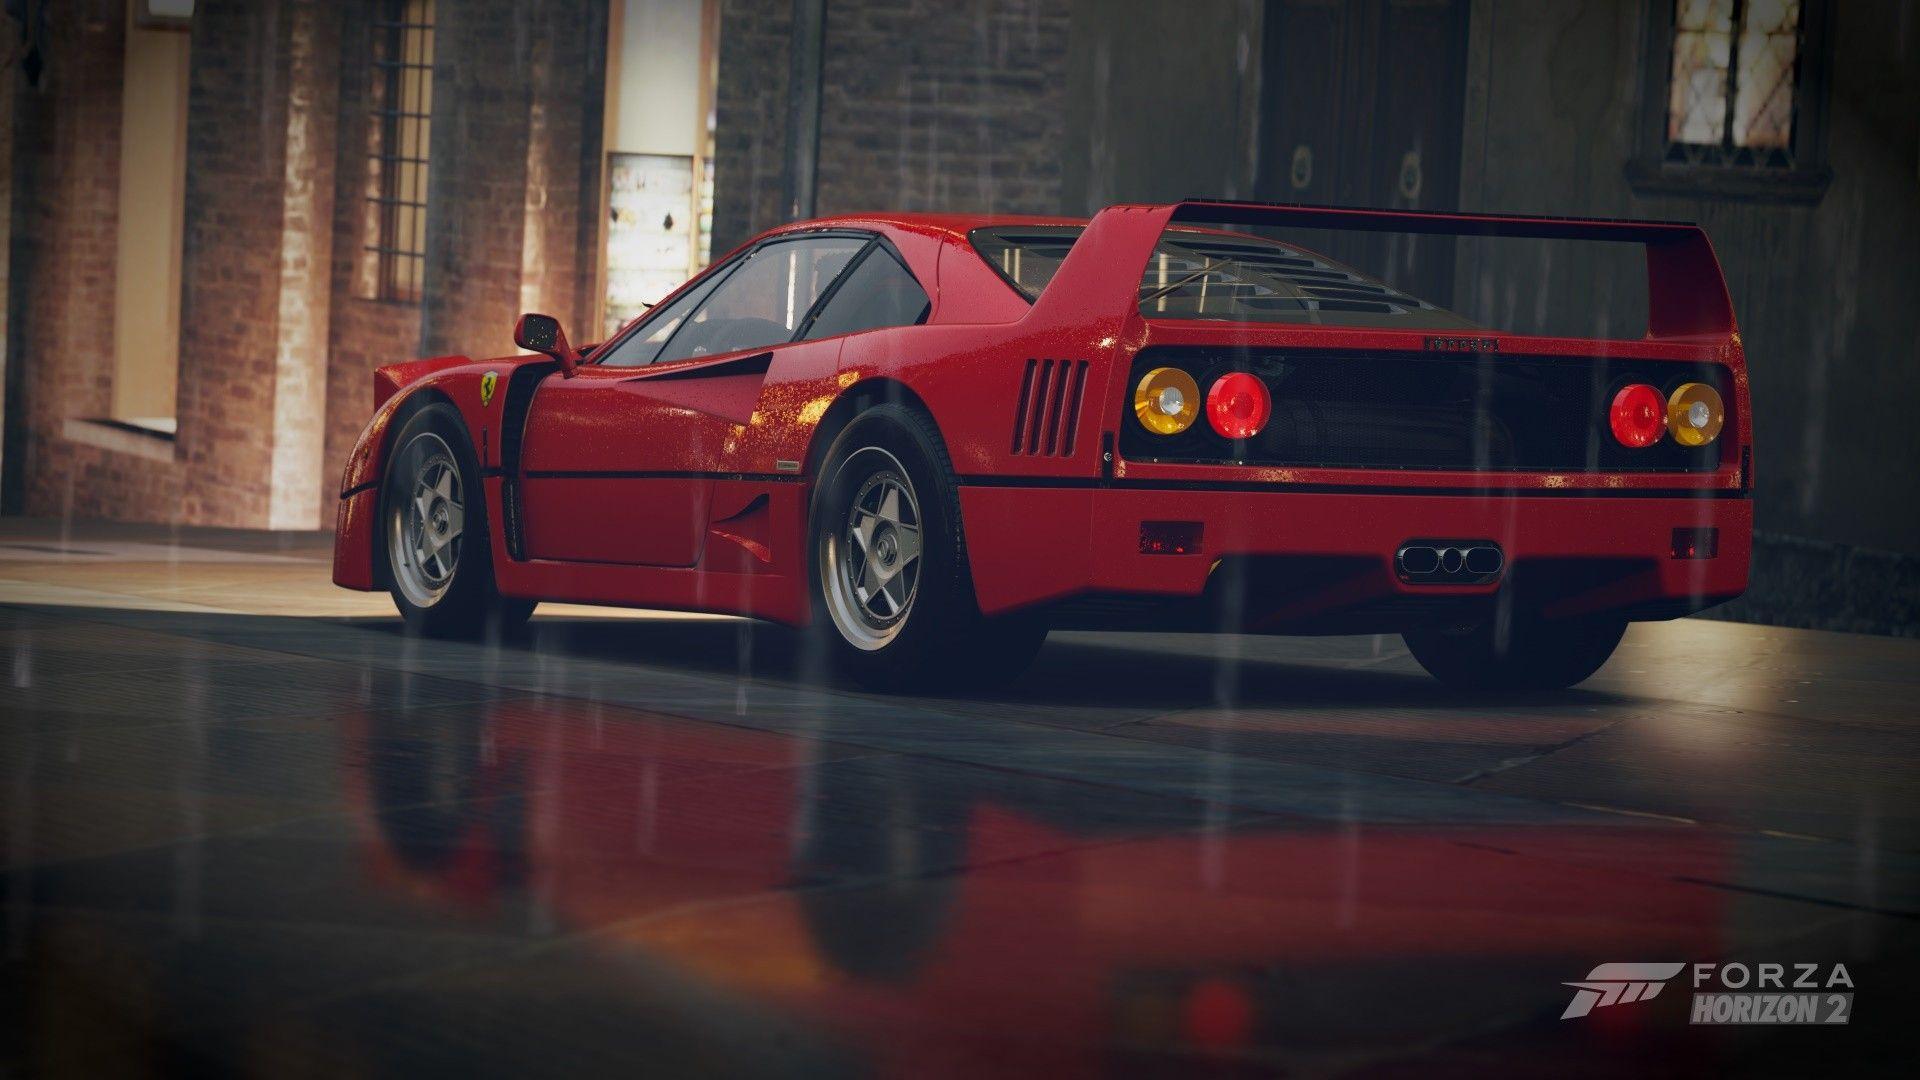 Ferrari F40 HD Wallpaper Desktop Image and Photo